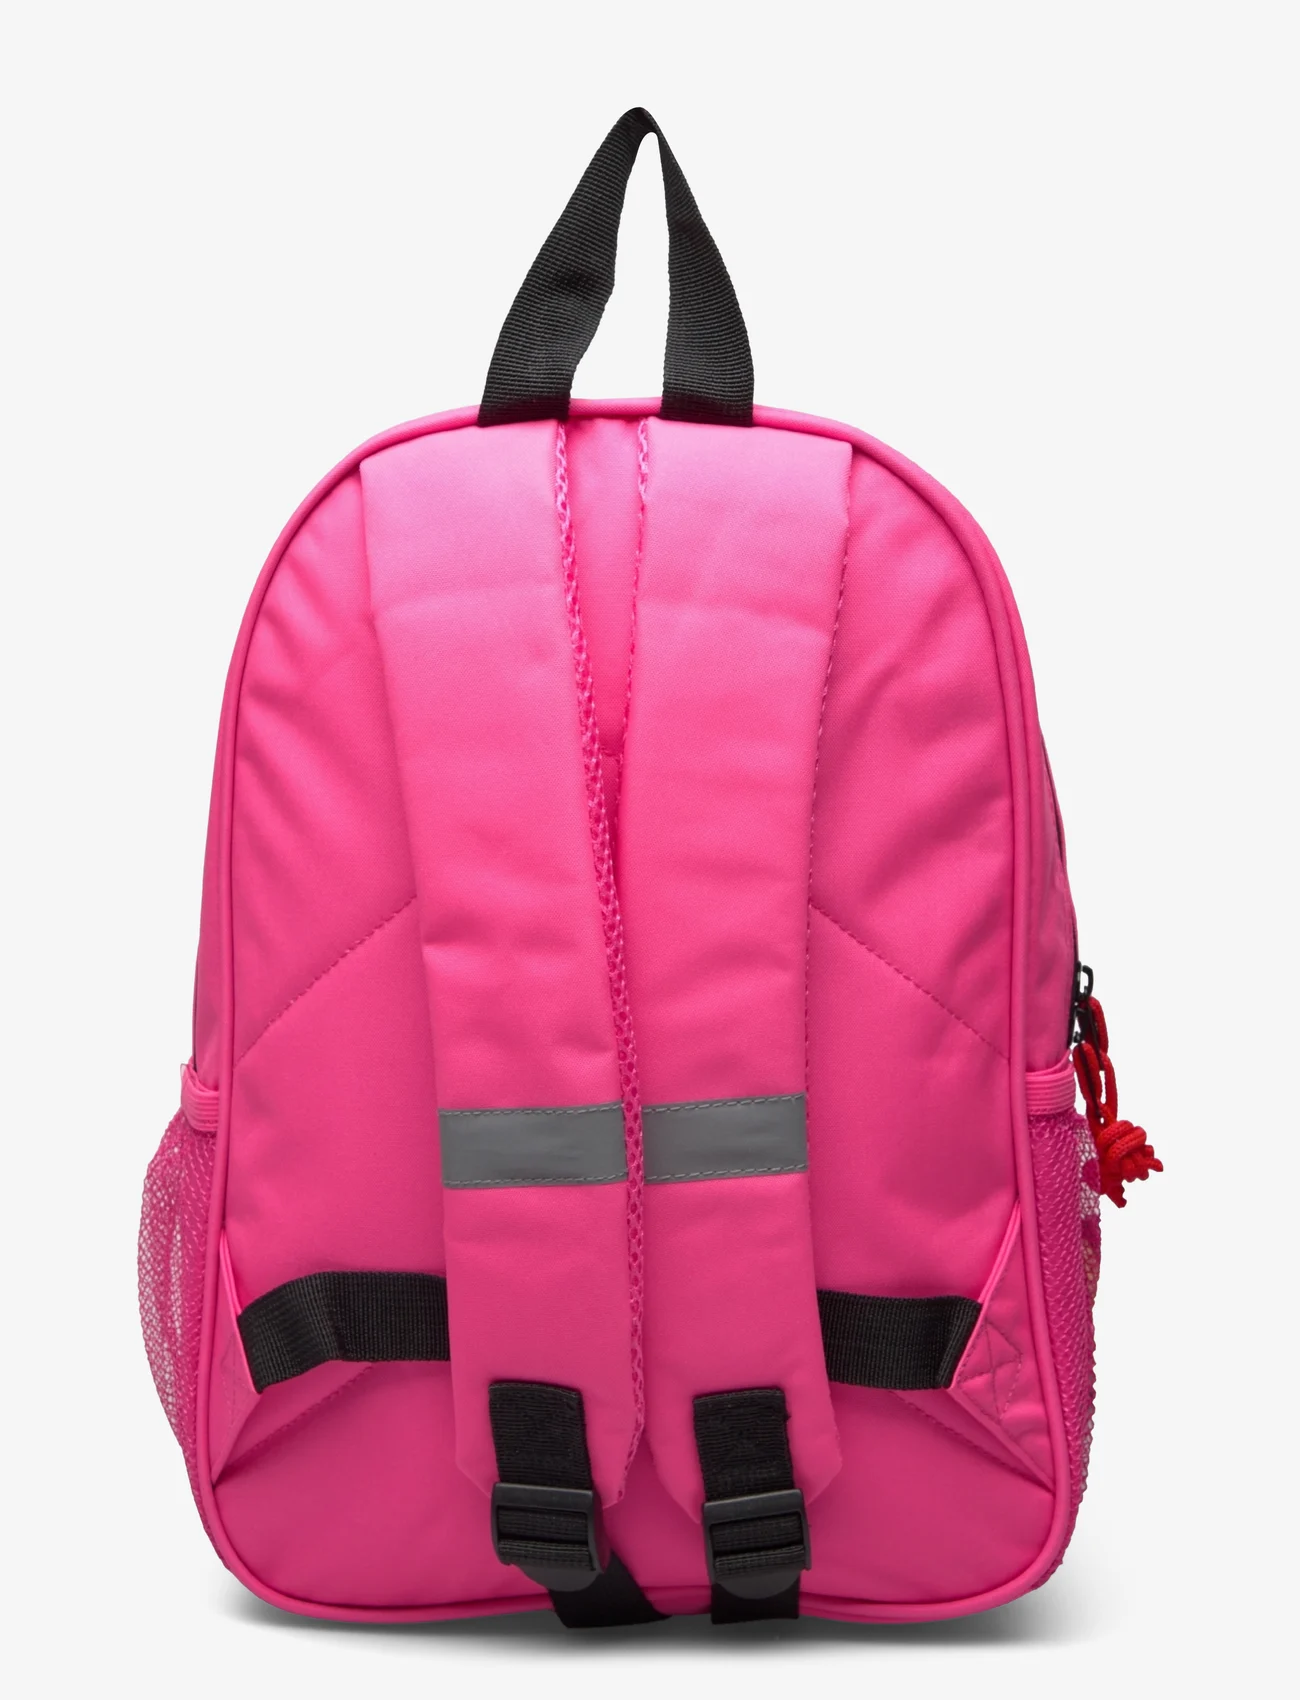 Euromic - L.O.L. NEXT LEVEL medium backpack - kesälöytöjä - pink - 1